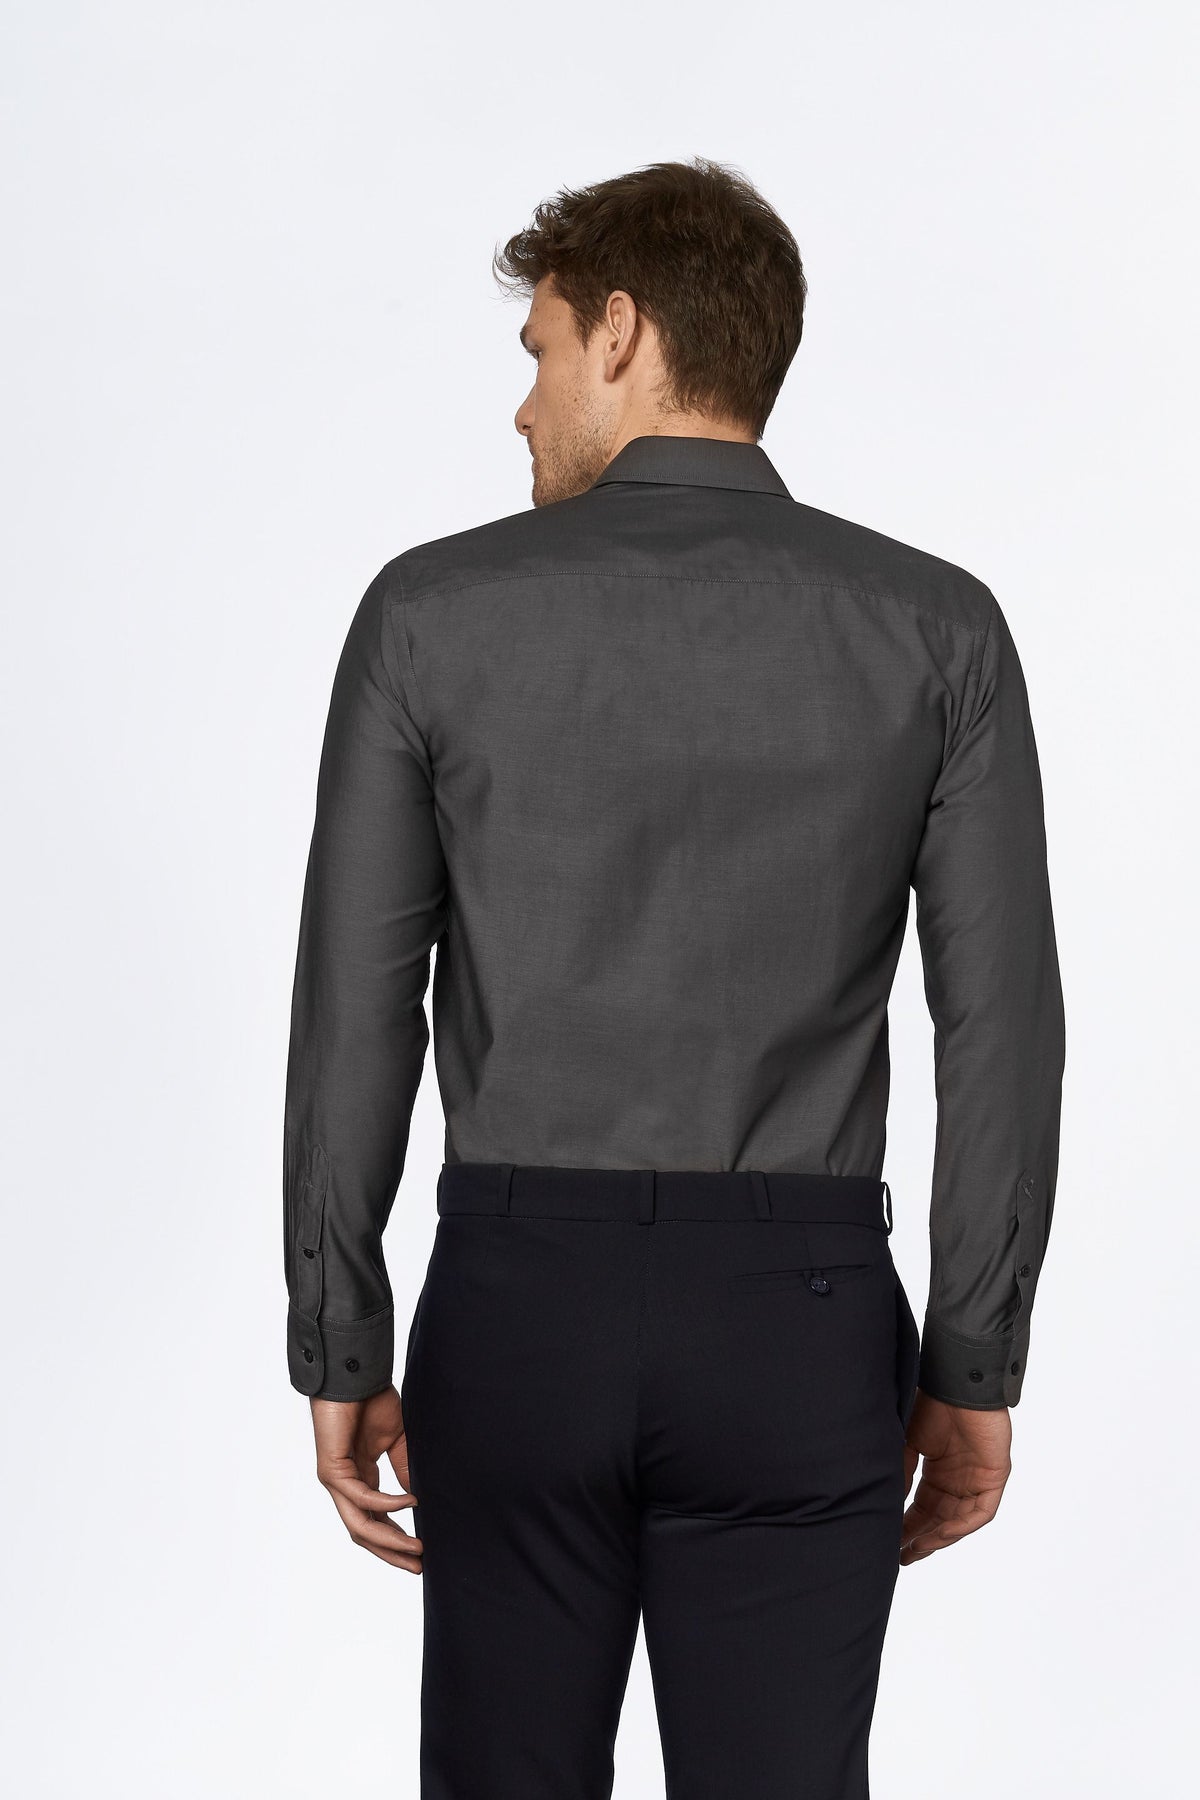 carpasus sustainable organic cotton dress shirt dark grey. Nachhaltiges Carpasus Businesshemd aus Bio Baumwolle in Dunkelgrau